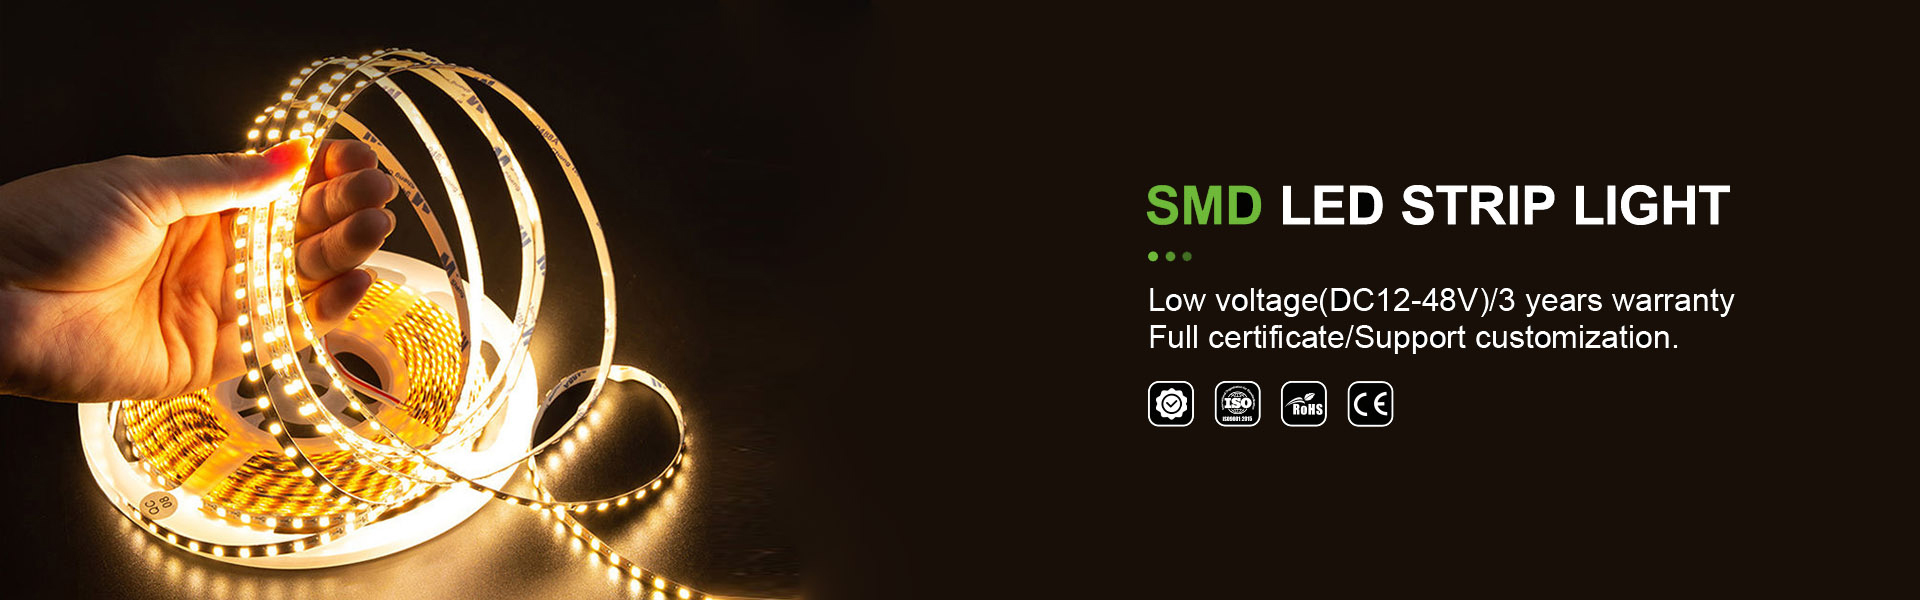 led strip lighting,neon light,cob strip lighting,AWS (SZ) Technology Company Limited